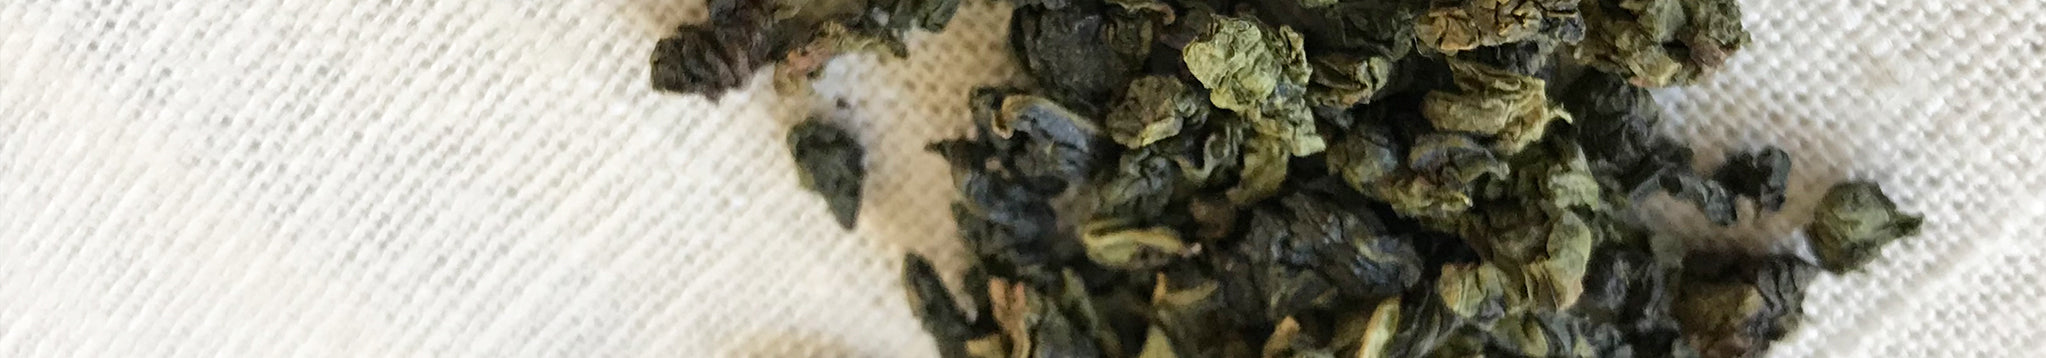 Oolong Tea: Premium Oolong Teas with Bold Flavors | Stash Tea